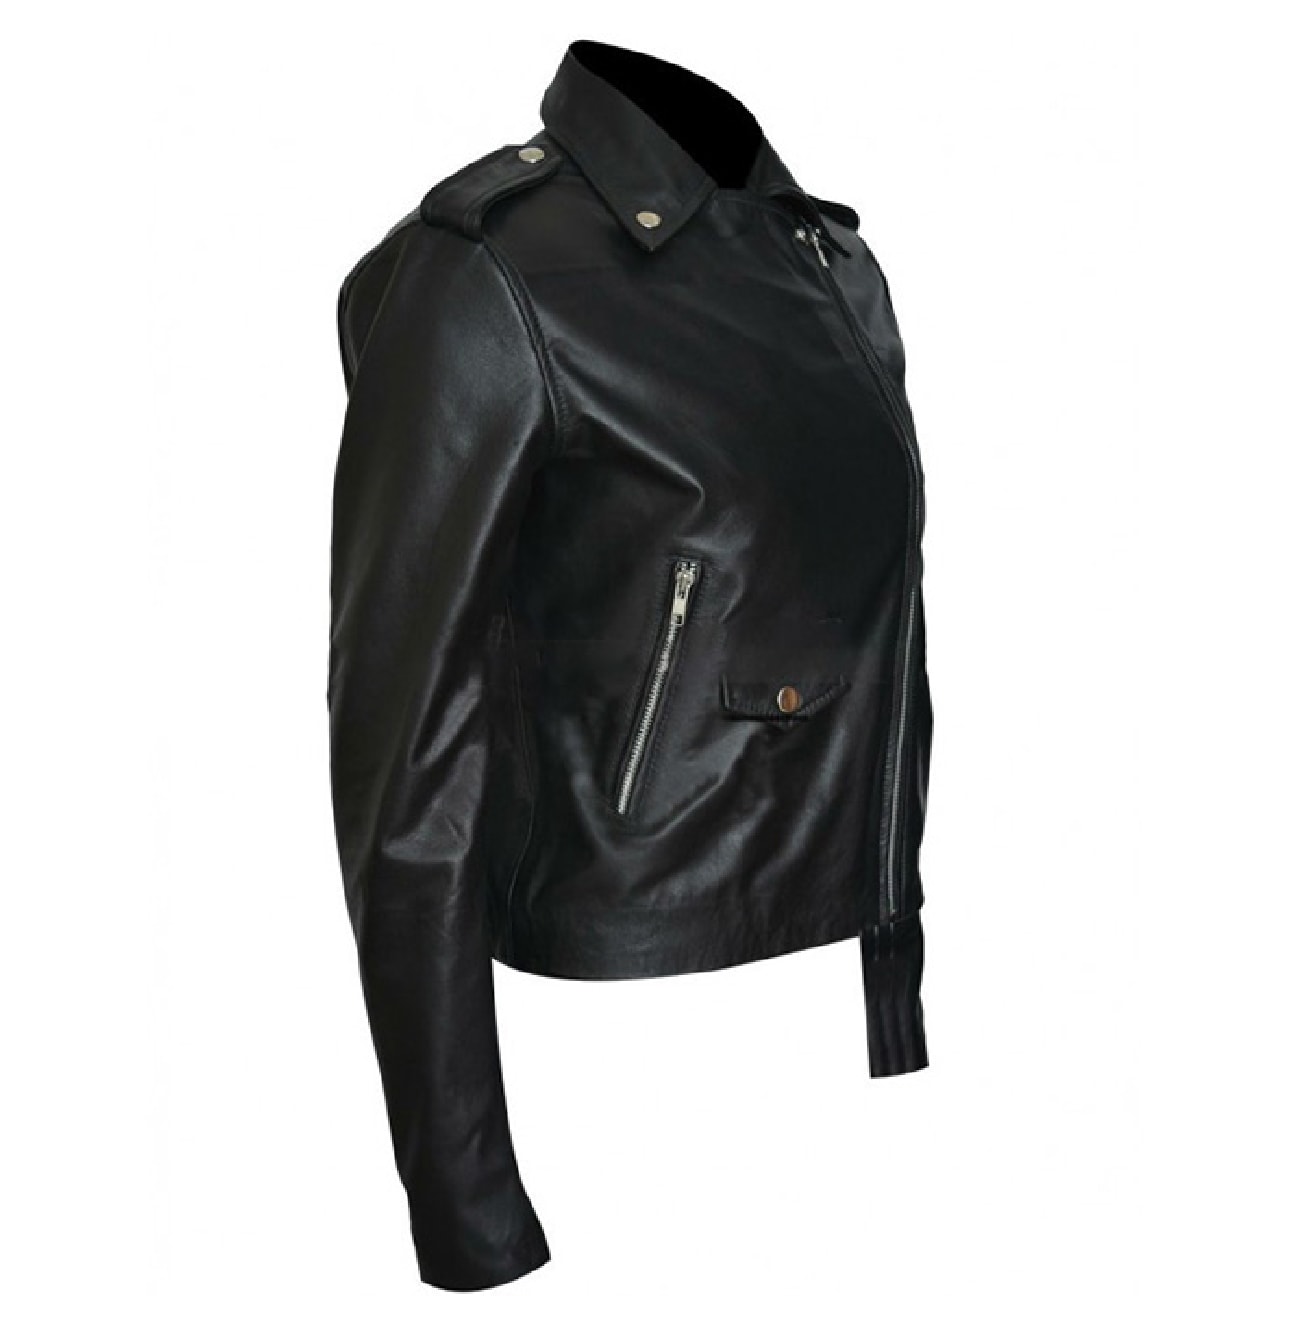 Jessica jones black leather jacket side